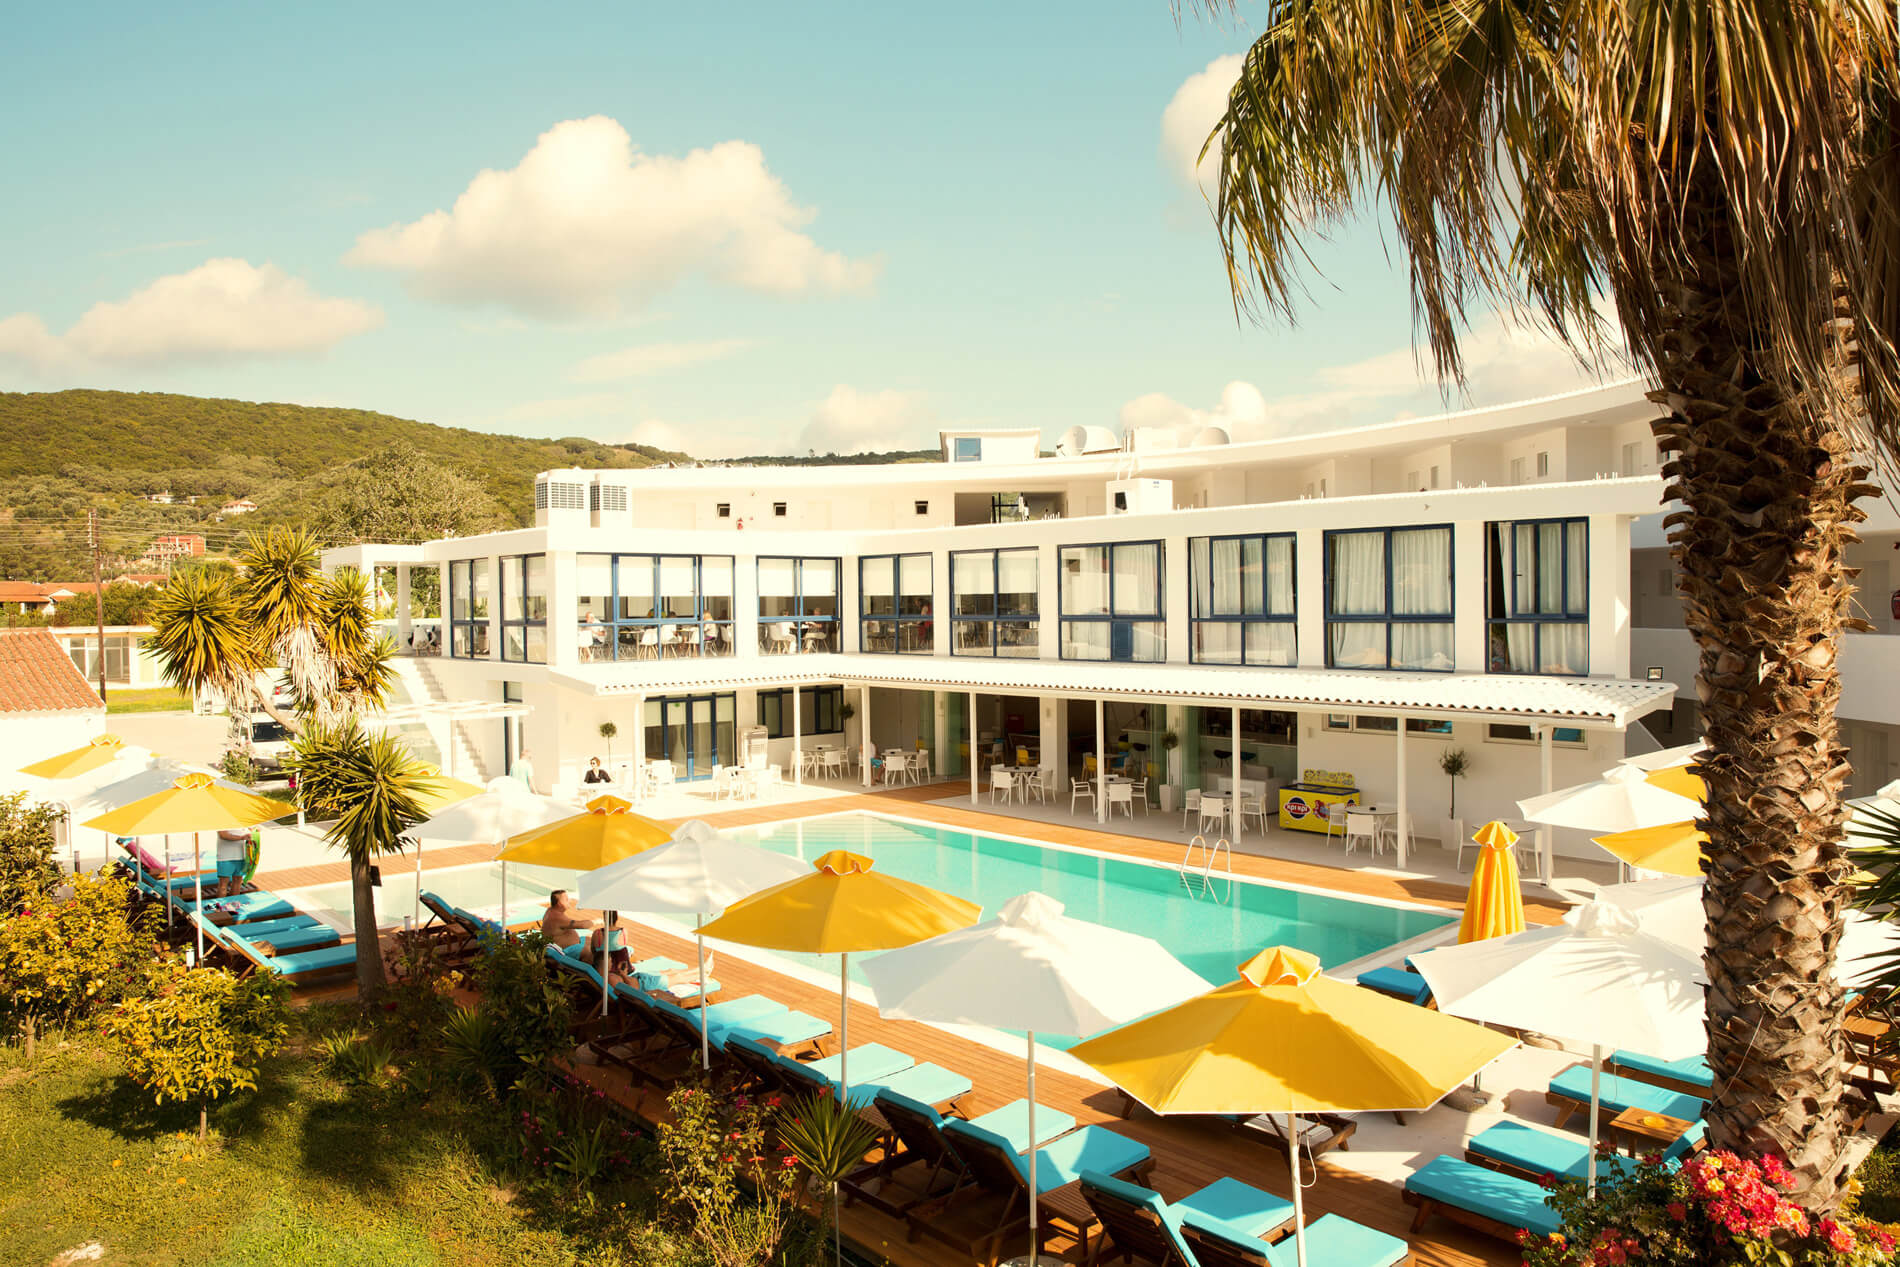 Nasos Hotel & Resort – Μοραϊτικα, Κέρκυρα Πάσχα Κέρκυρα – 30% 4 ημέρες/3 νύχτες με Ημιδιατροφή για 2 άτομα+παιδί δωρεάν